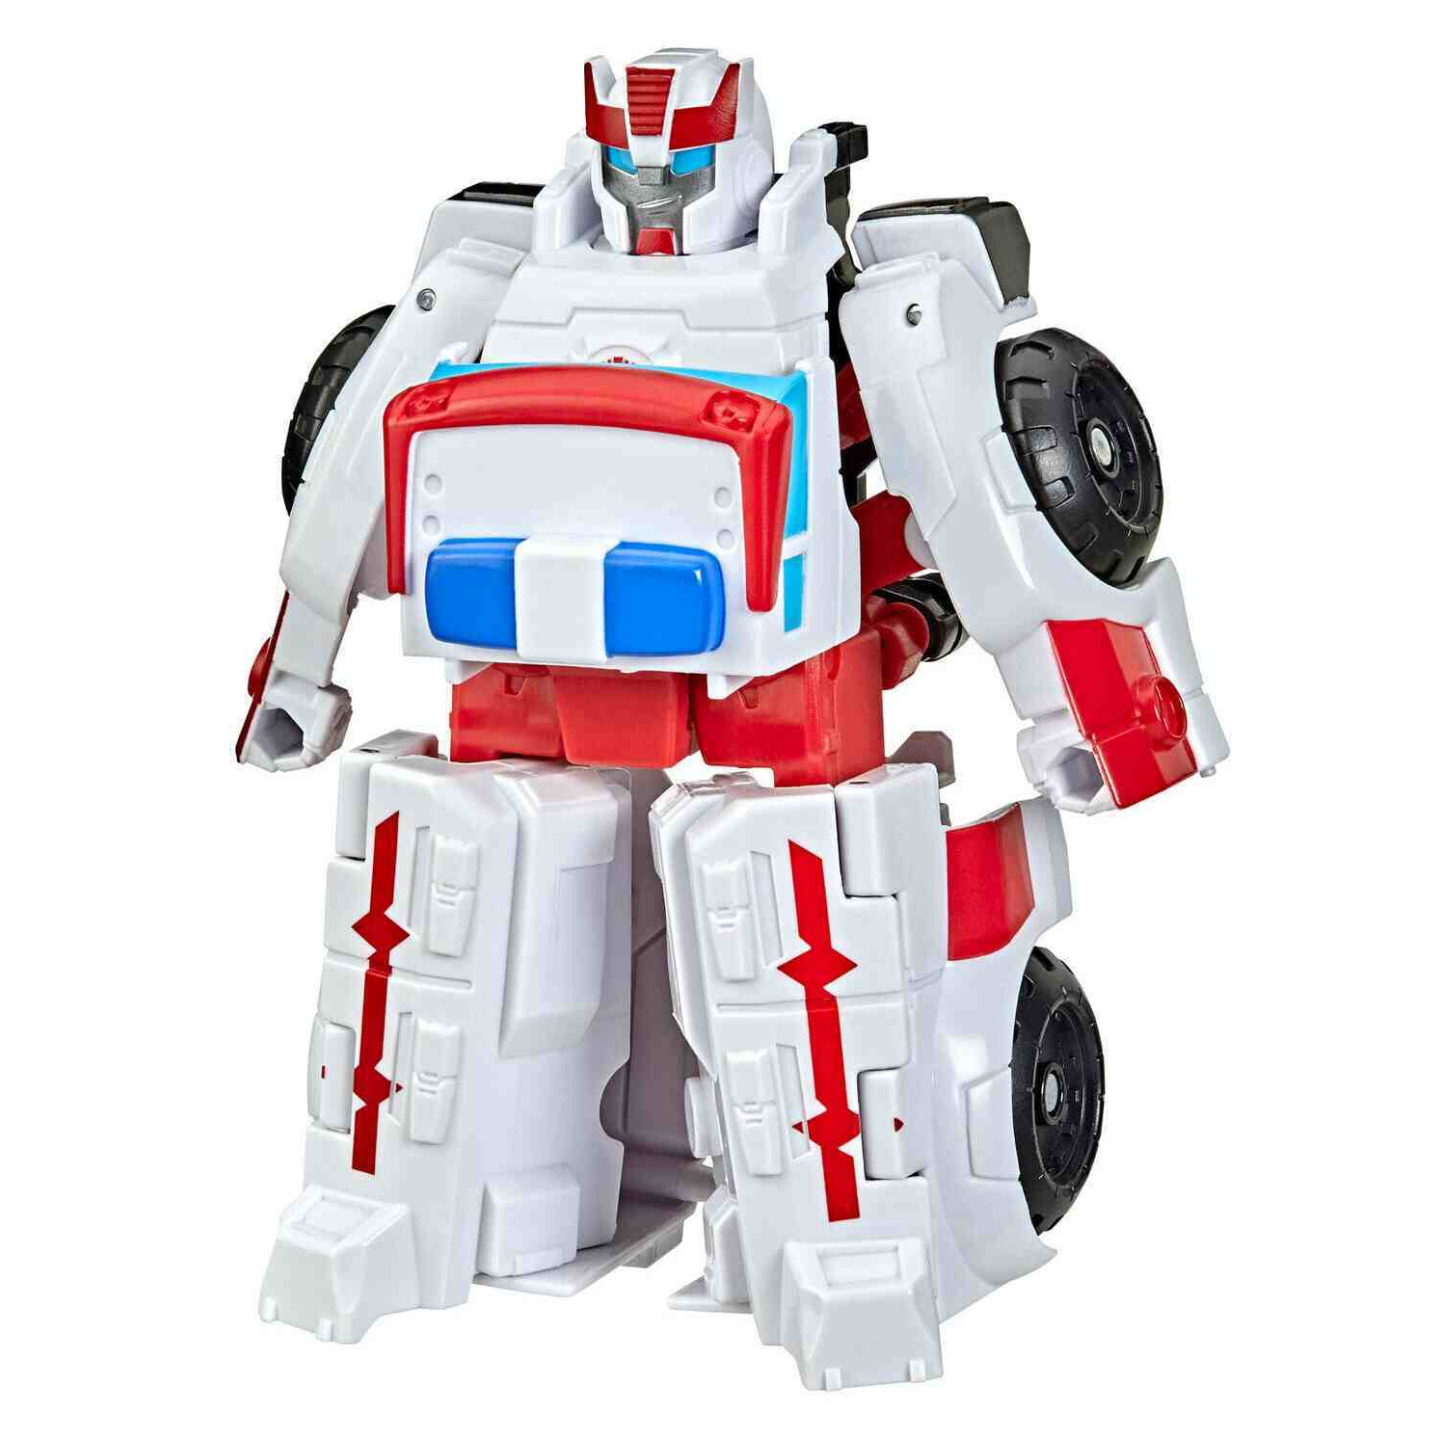 Transformers Rescue Bots Academy AUTOBOT RATCHET, Hasbro F4445